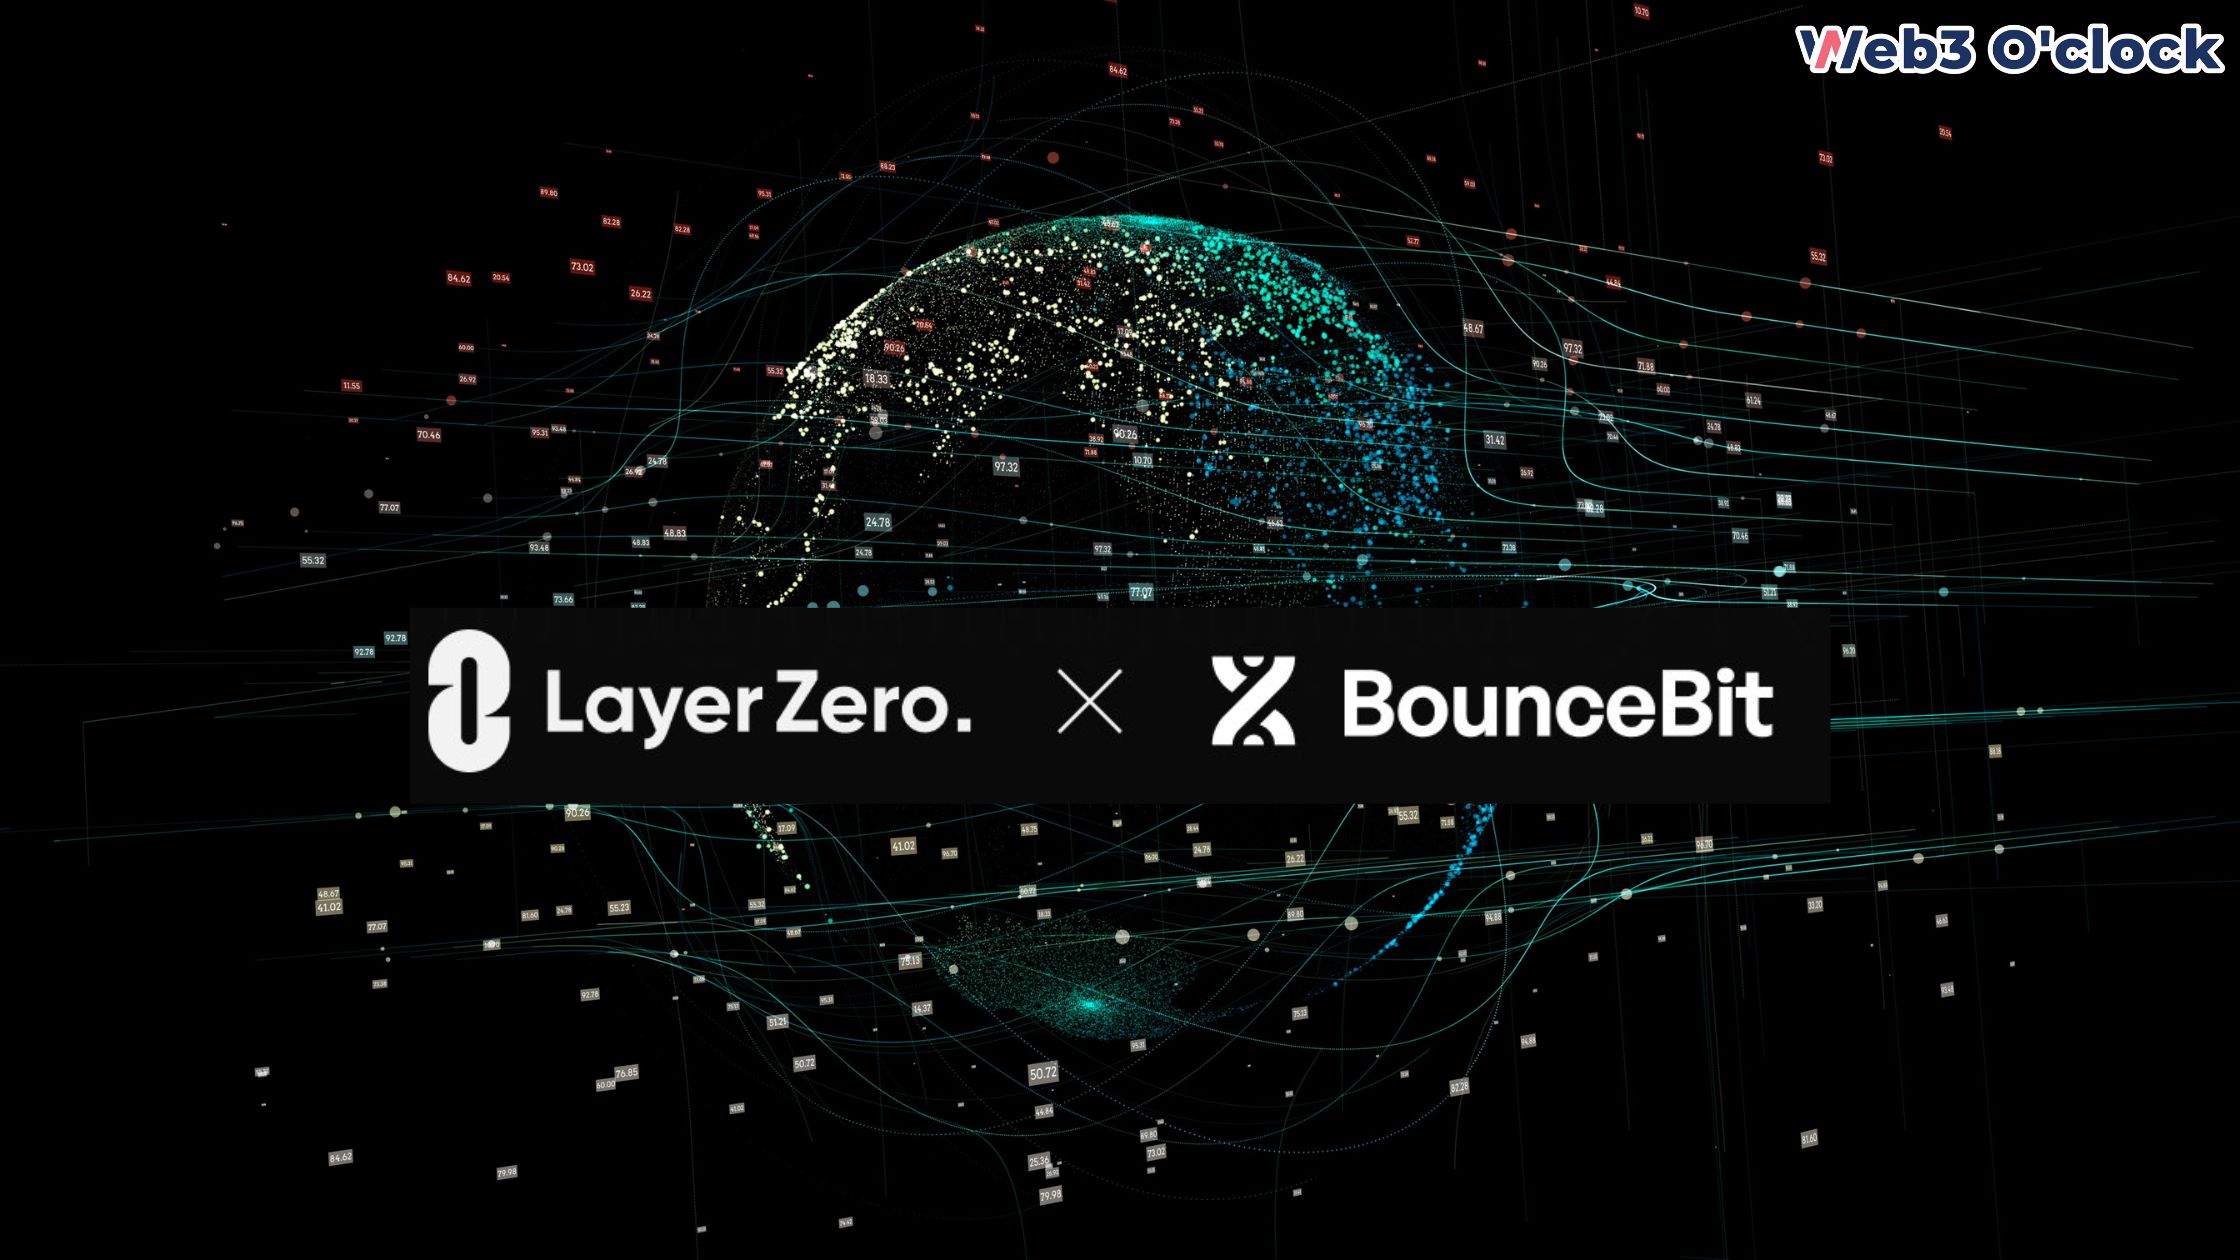 LayerZero Labs and BounceBit Merge by web3 o'clock